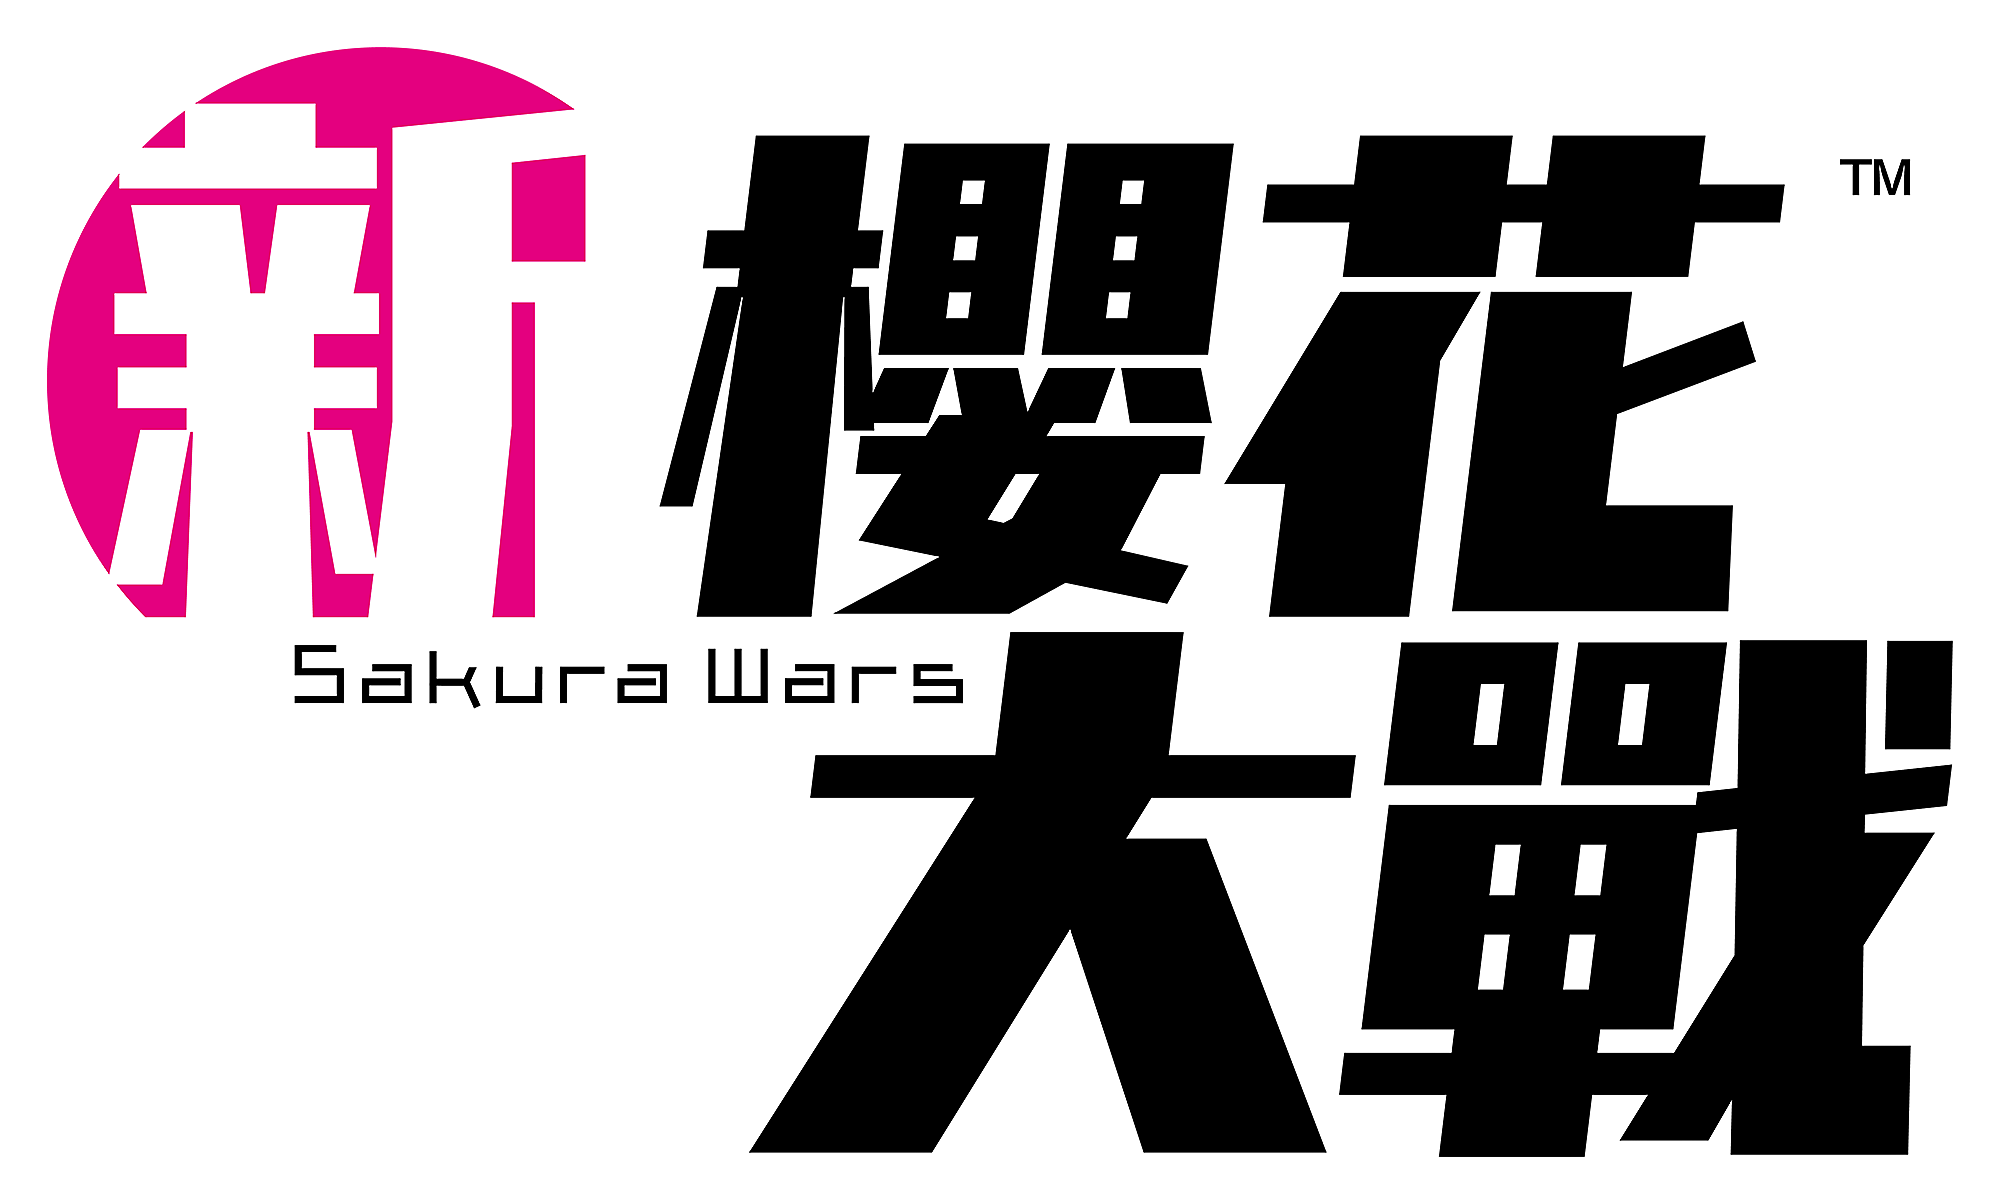 new-sakura-wars-logo-13dec19-en-hk